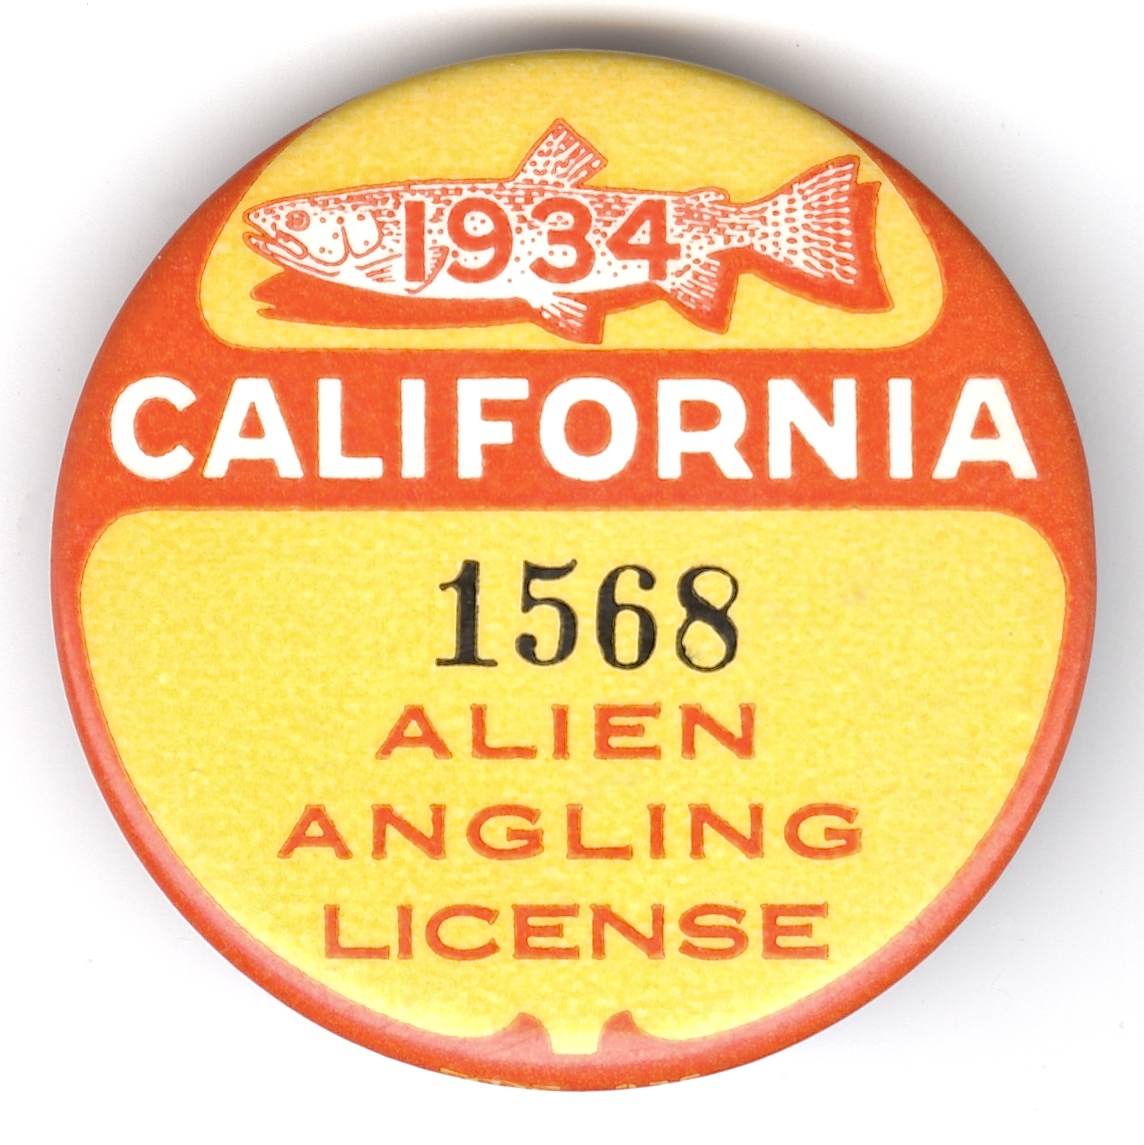 1934 California Alien Angling License Button